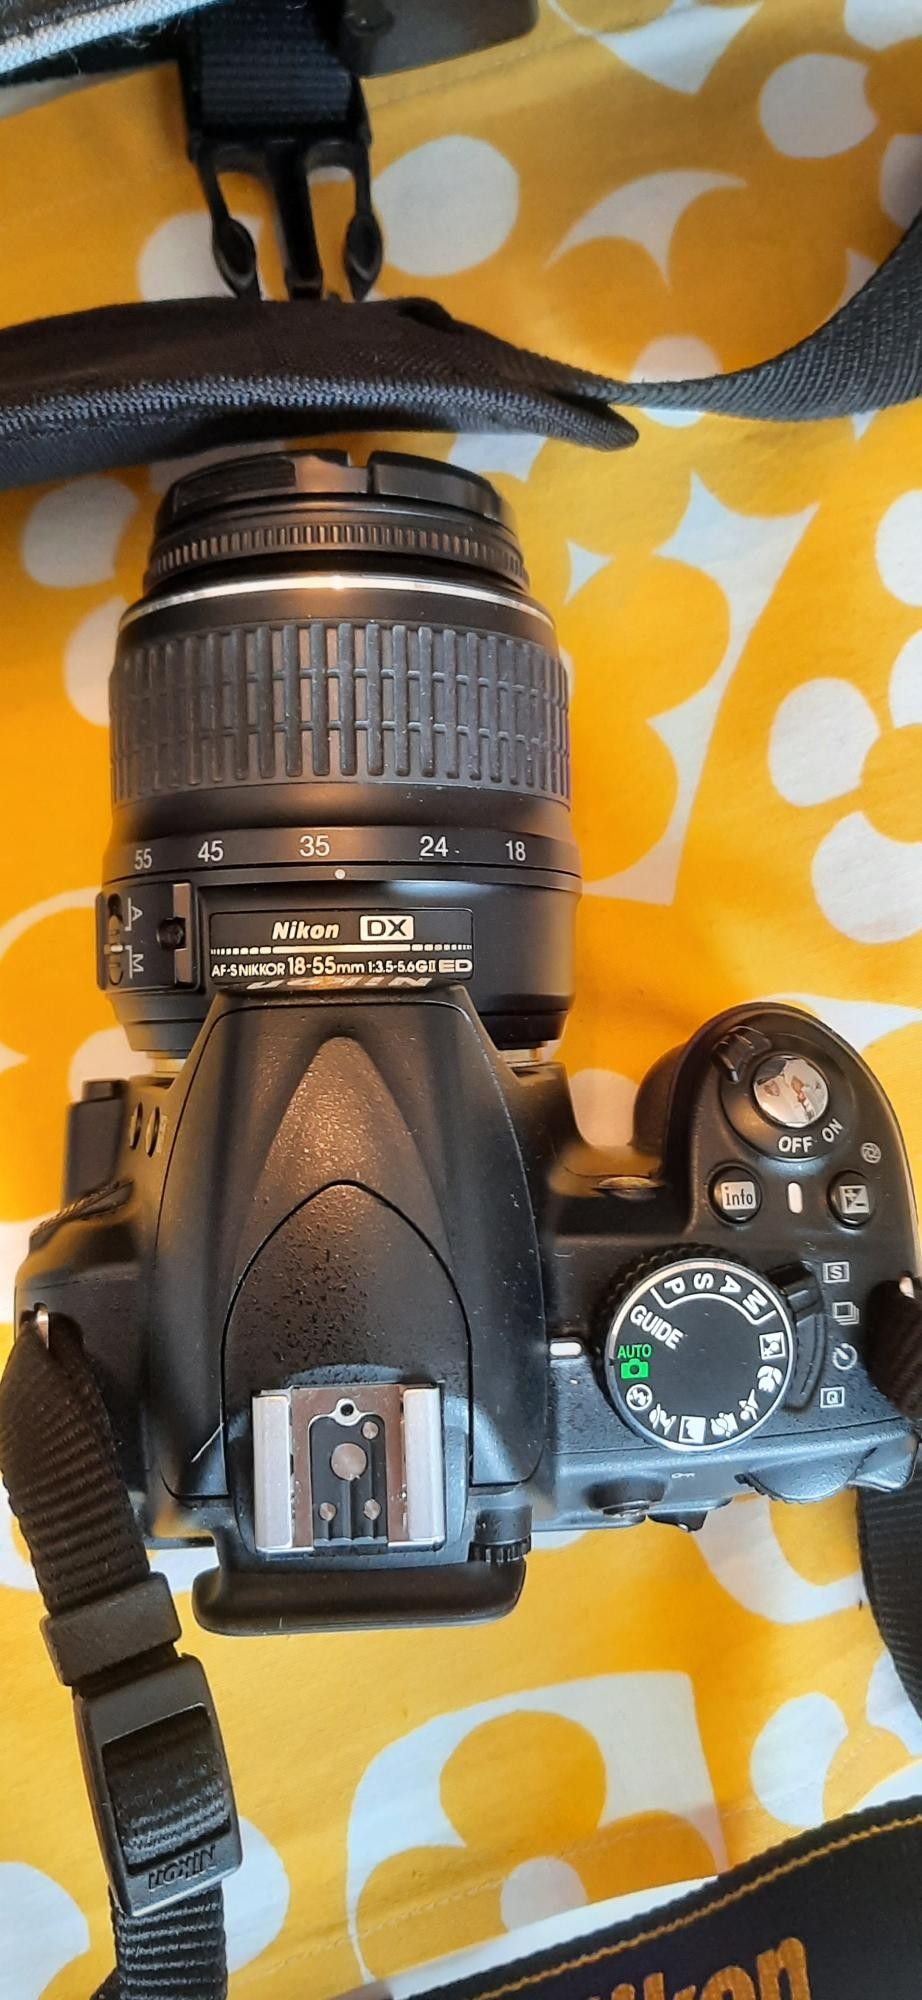 Nikon D3100 kamera